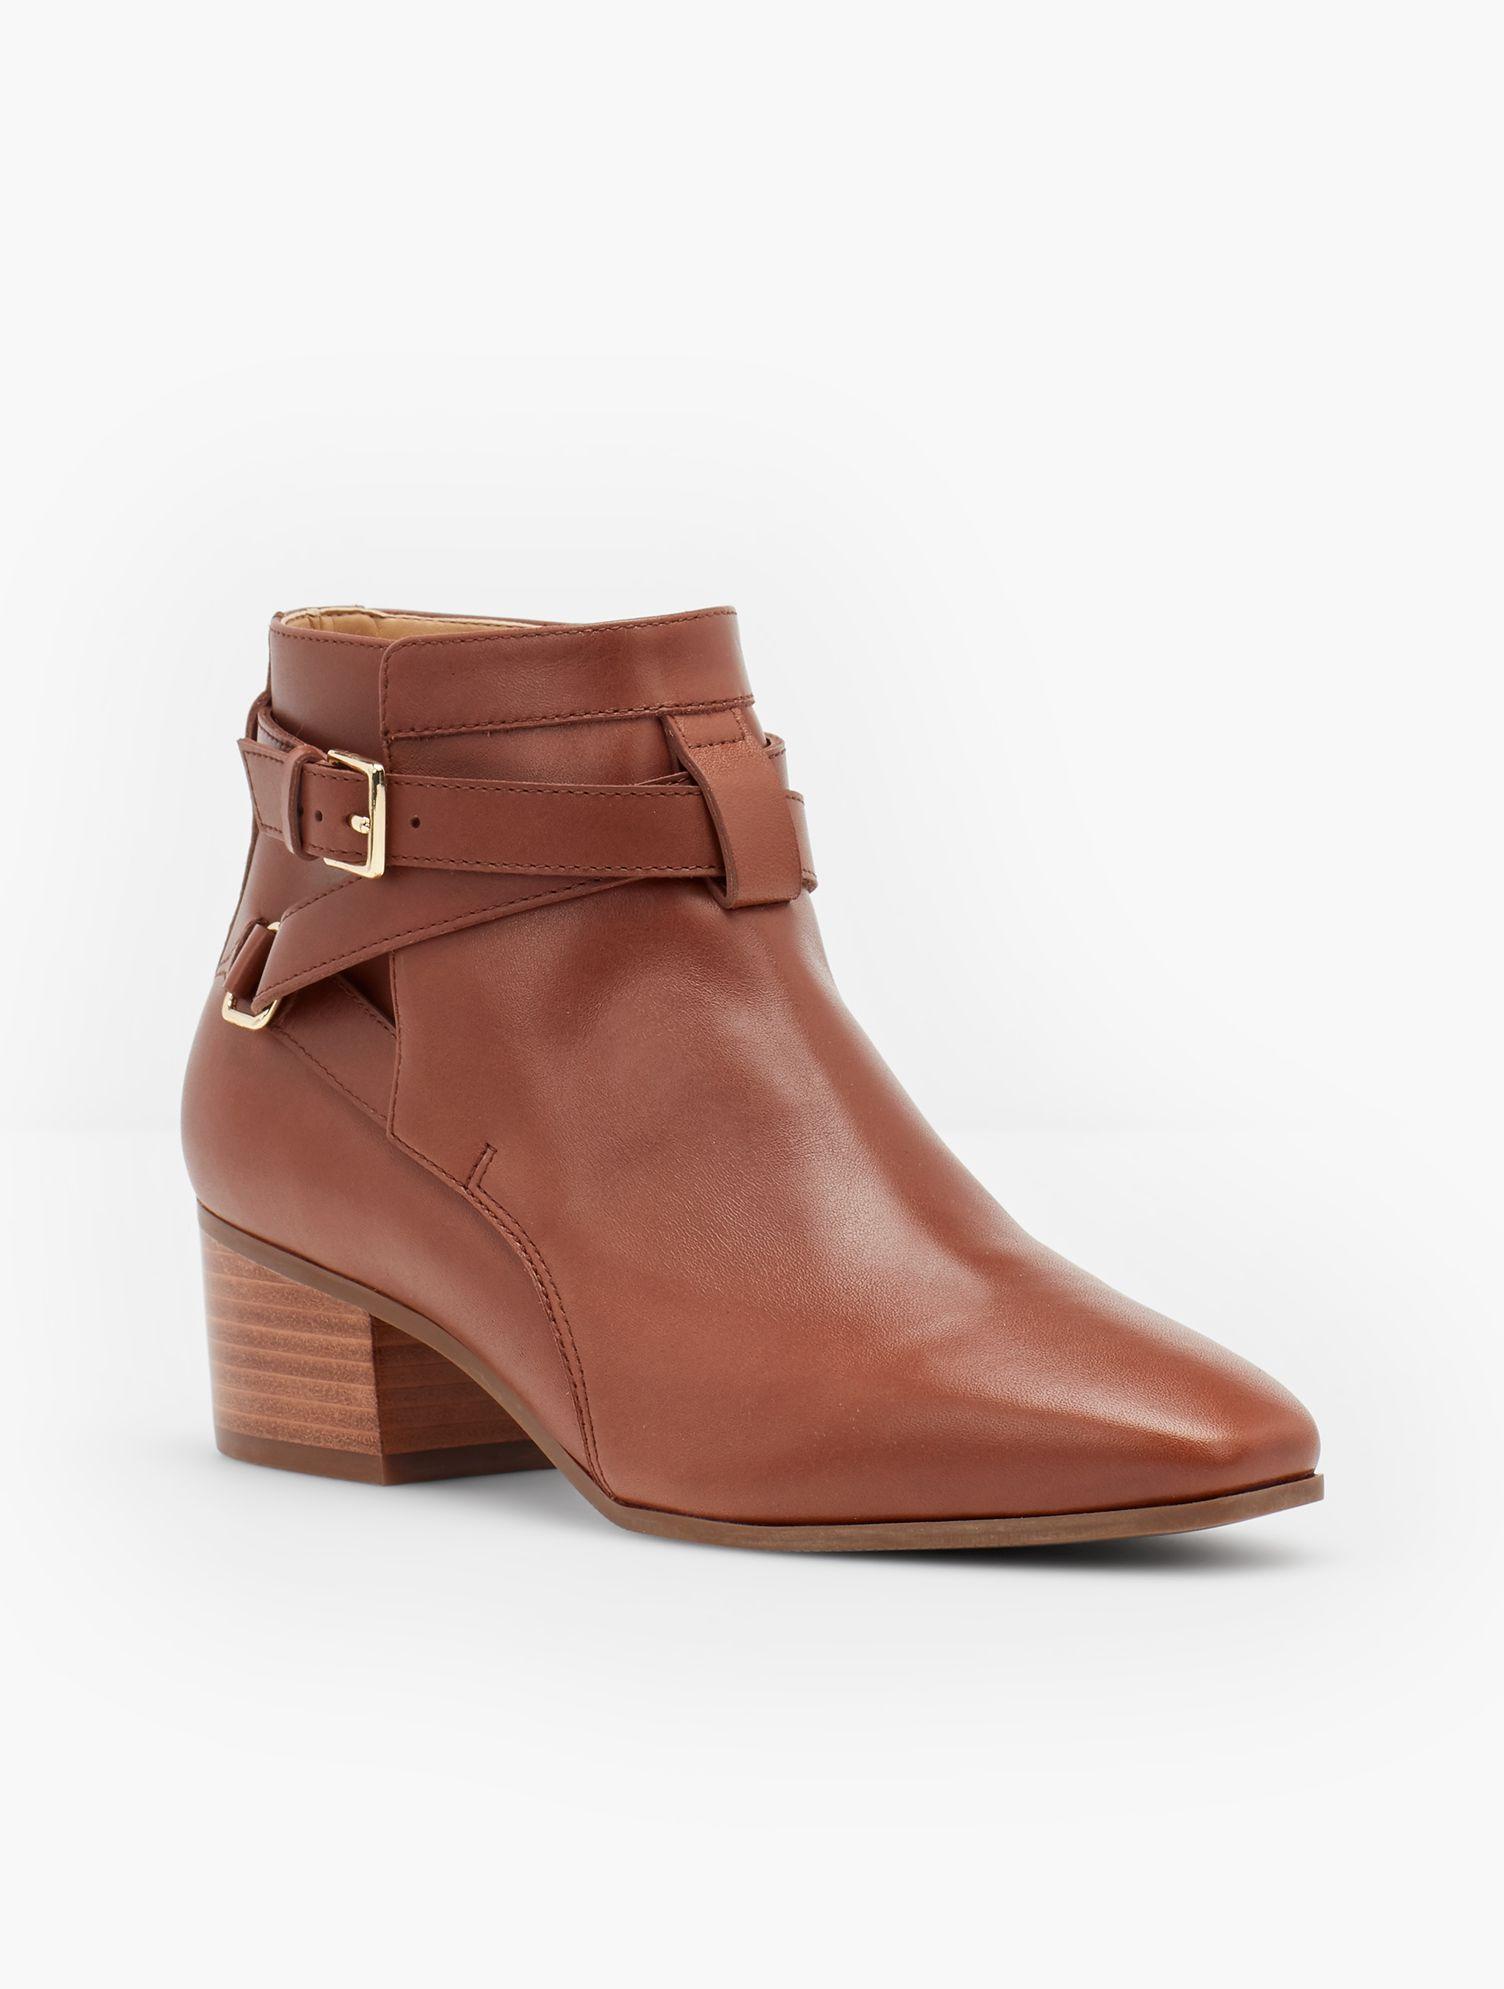 Talbots Leather Dakota Block Heel Ankle Boots in Chestnut (Brown) - Lyst